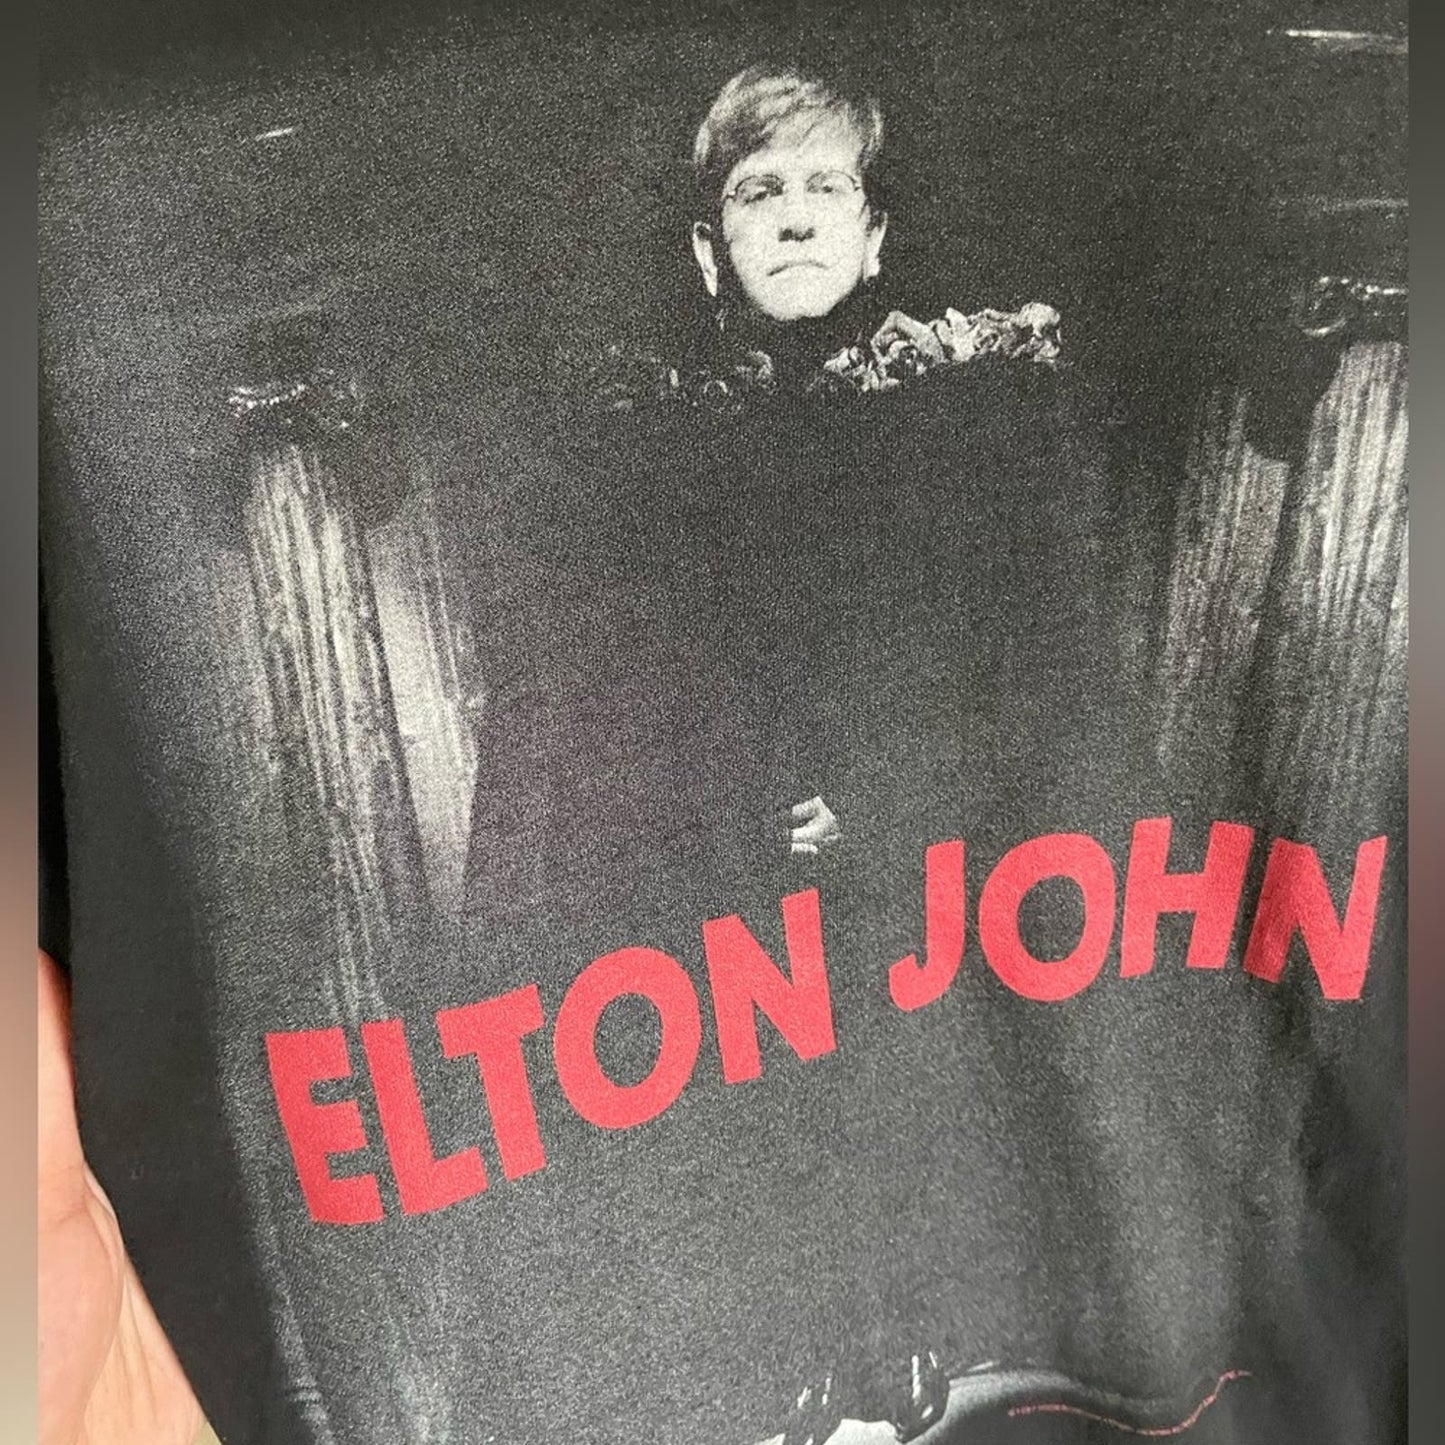 Elton John Vintage 1997 Tour Graphic Single Stitch T-shirt